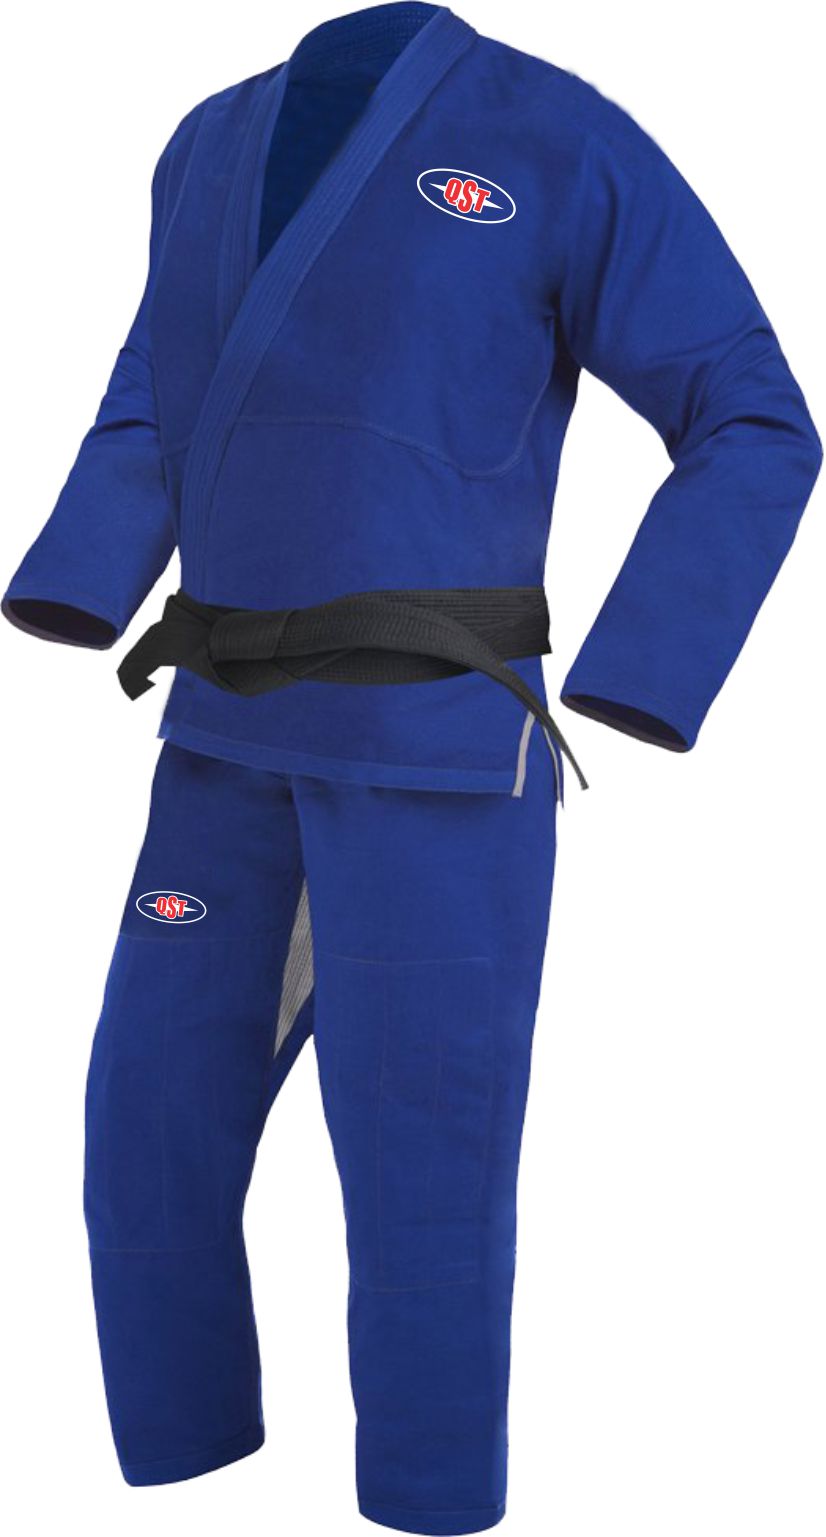 Jiu Jitsu Uniform - JJS-3552